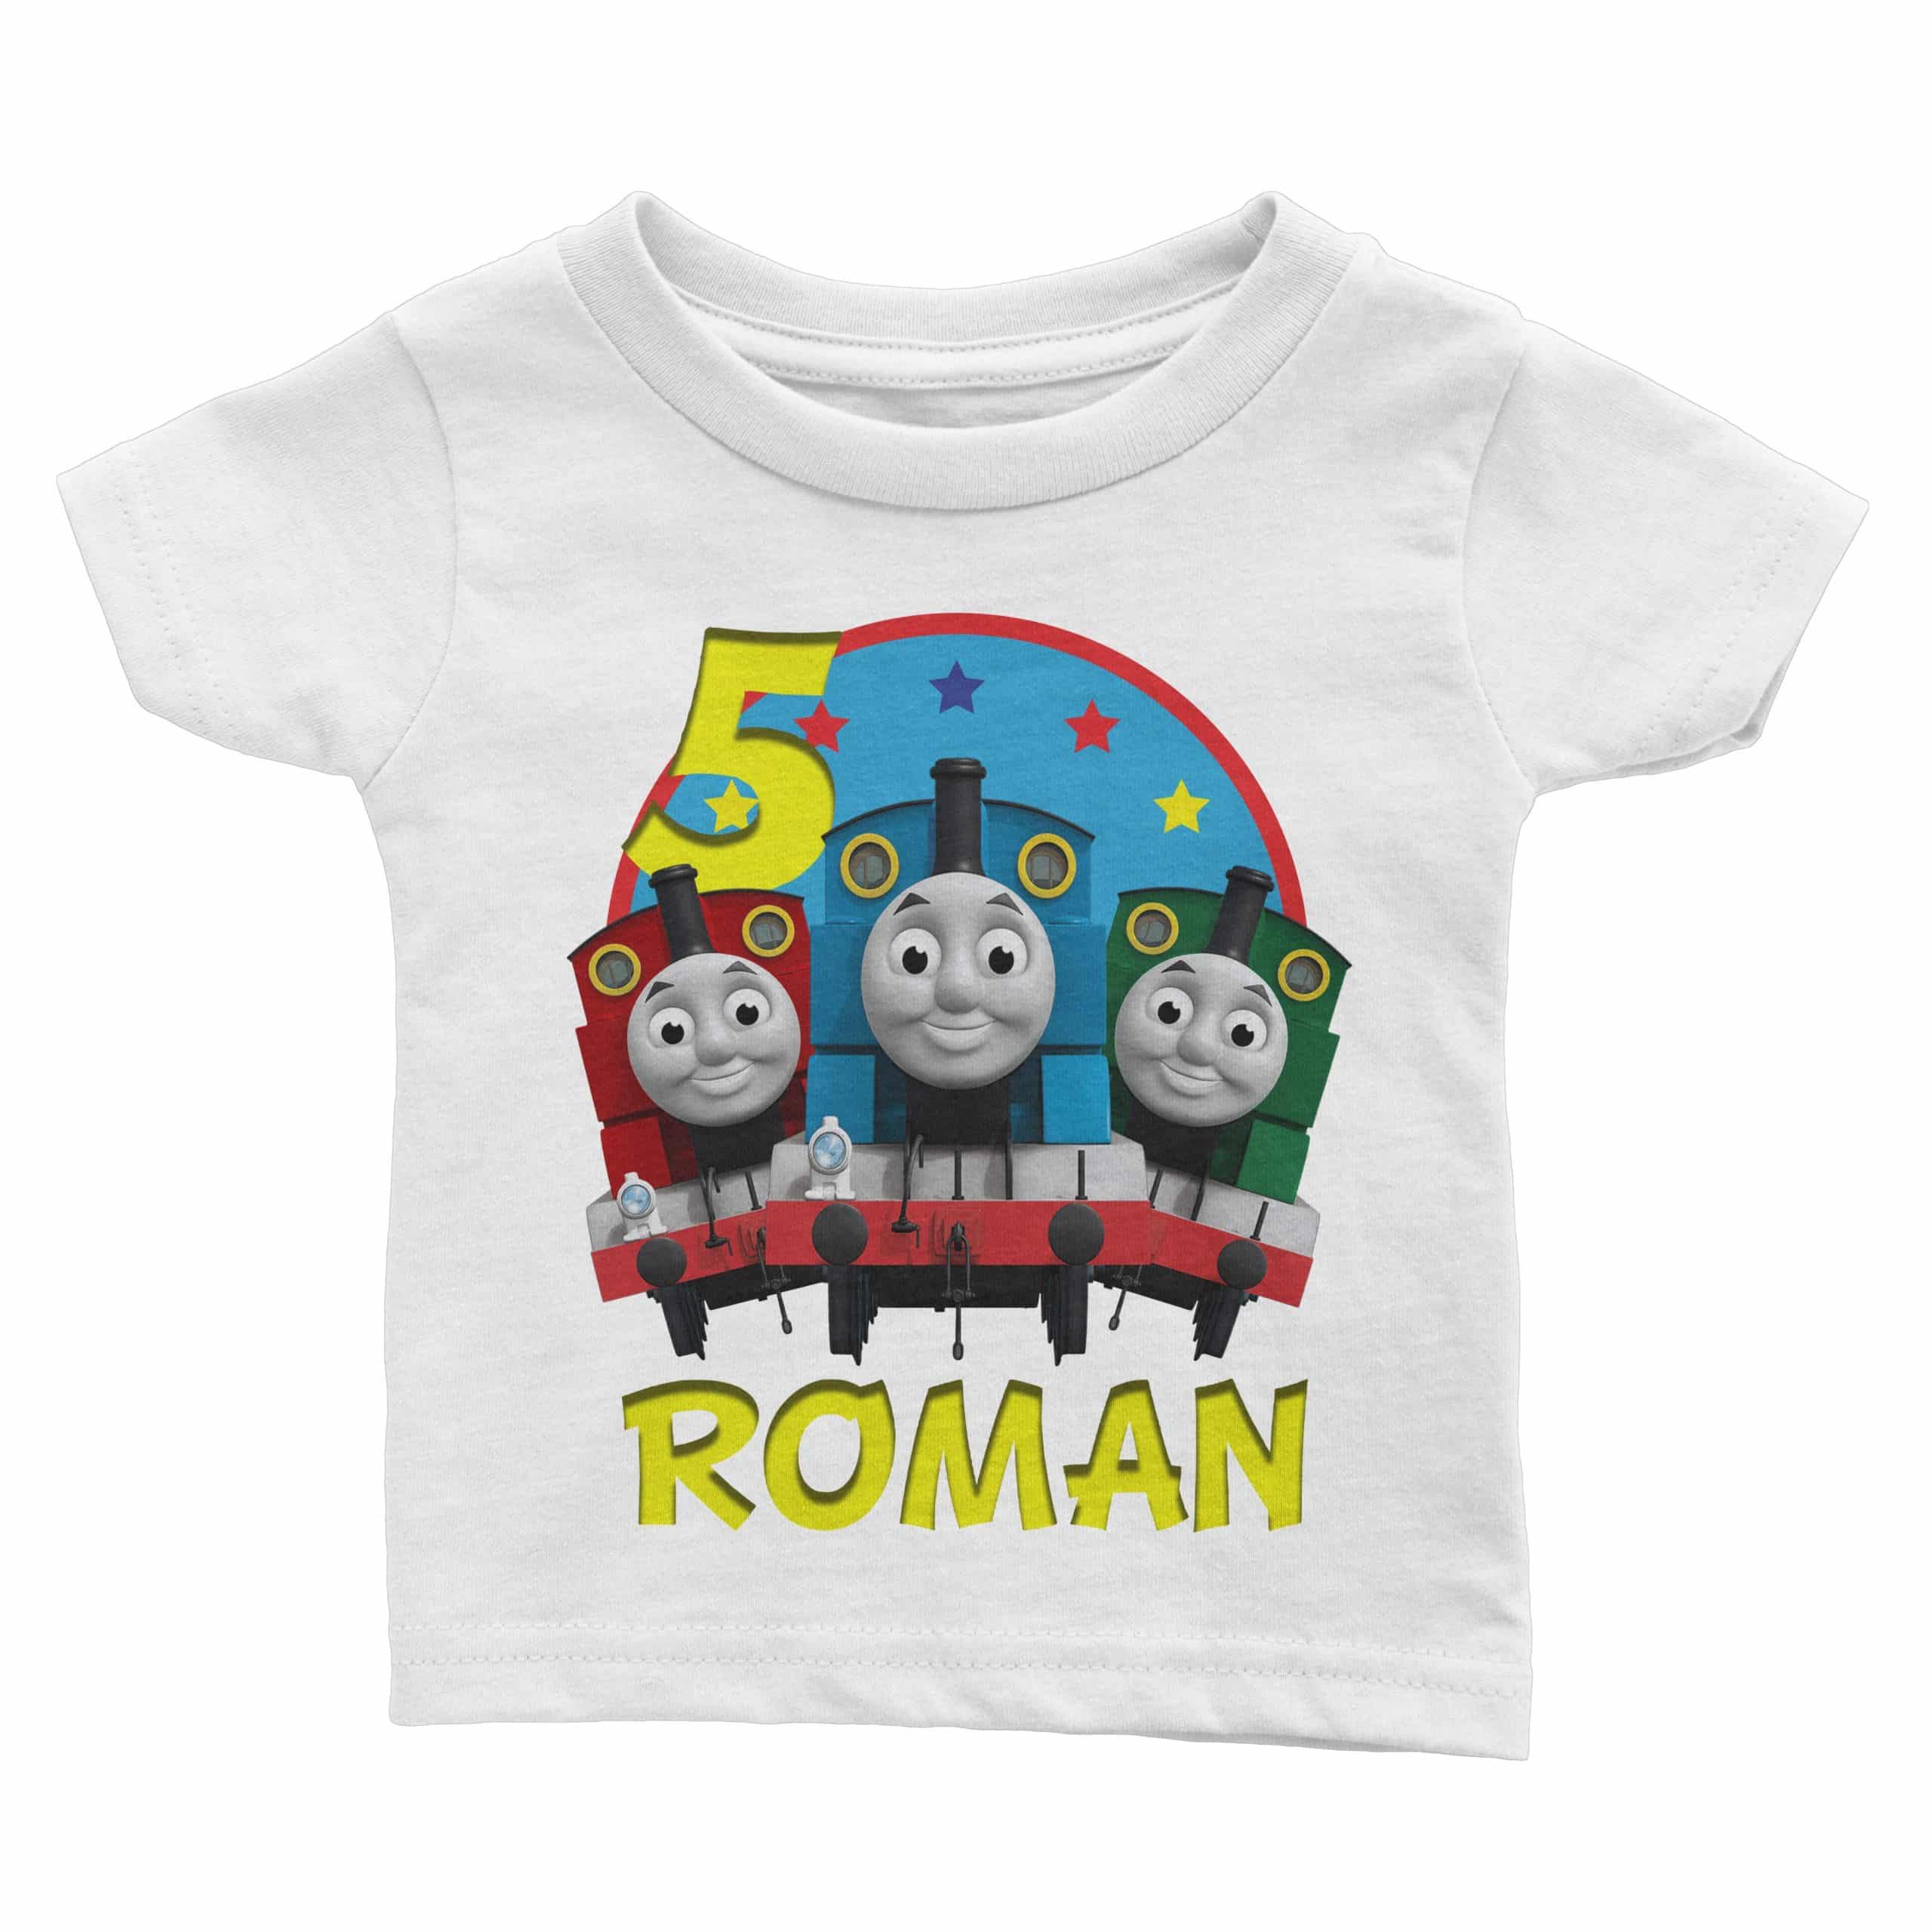 Personalized Raglan with Name & Age Thomas the Train Birthday Shirt 1st 2nd 3rd 4th 5th 6th 7th 8th 9th Birthday T Shirt. 35246